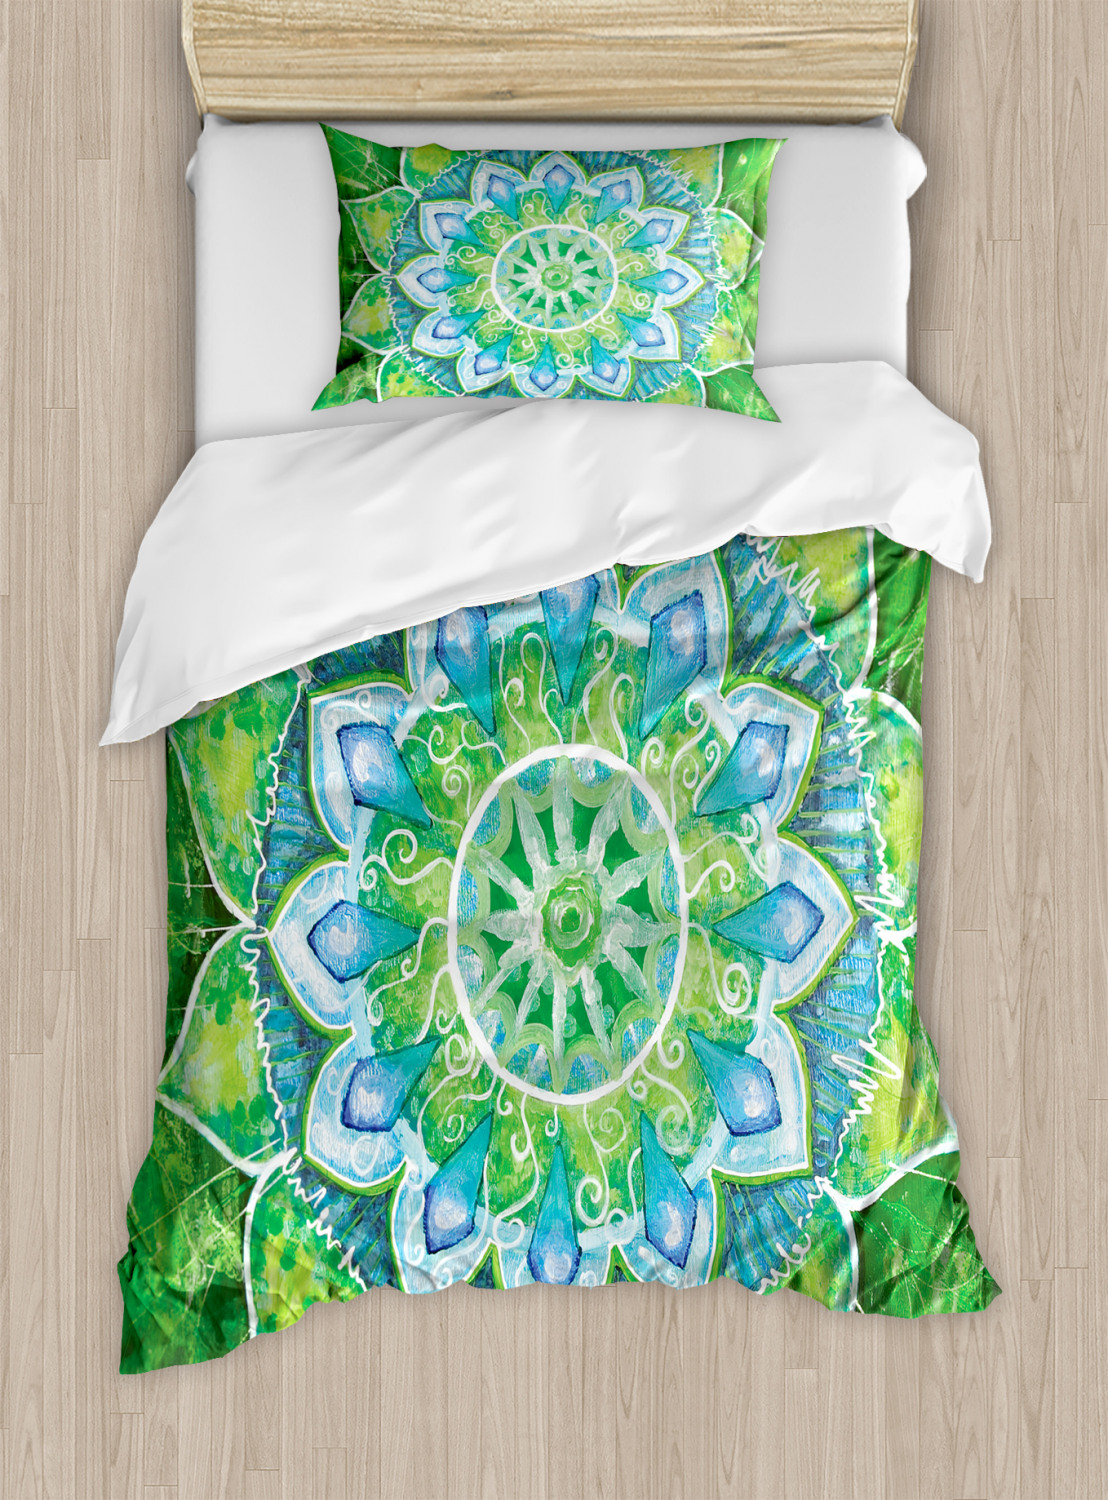 Leaf Forms Nature Zen Print Details about   Mandala Quilted Bedspread & Pillow Shams Set 